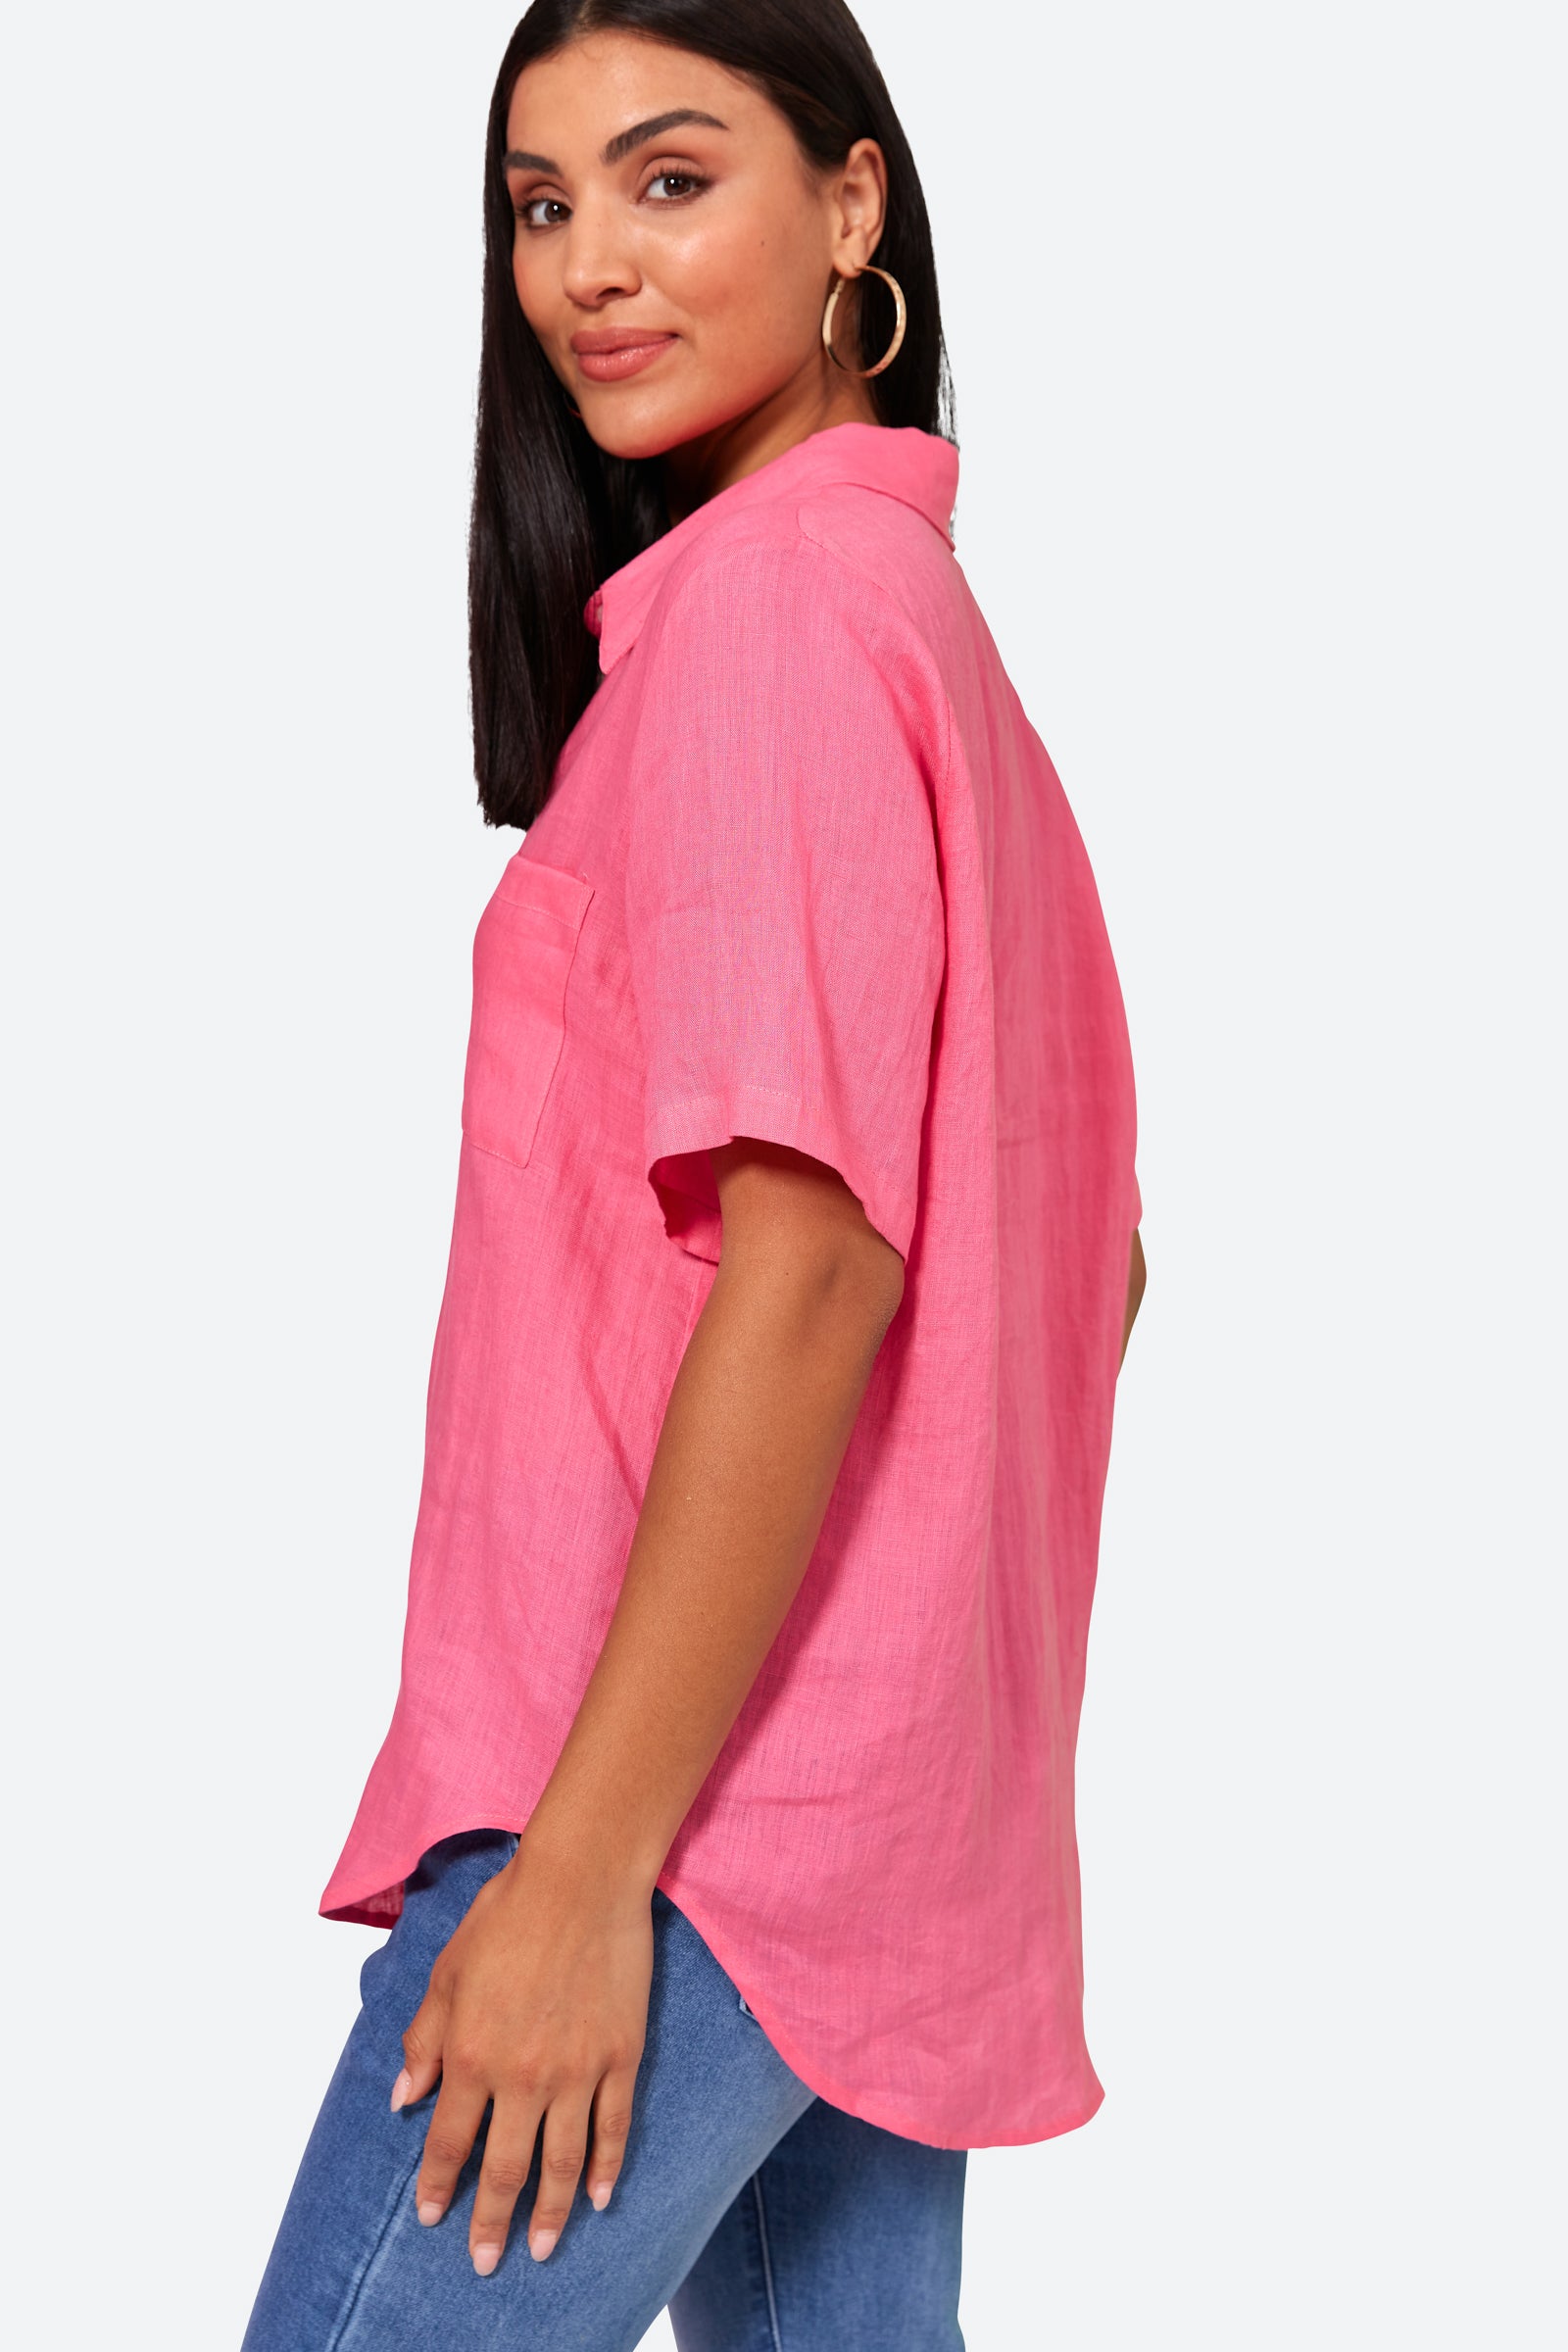 La Vie Shirt - Candy - eb&ive Clothing - Shirt S/S Linen